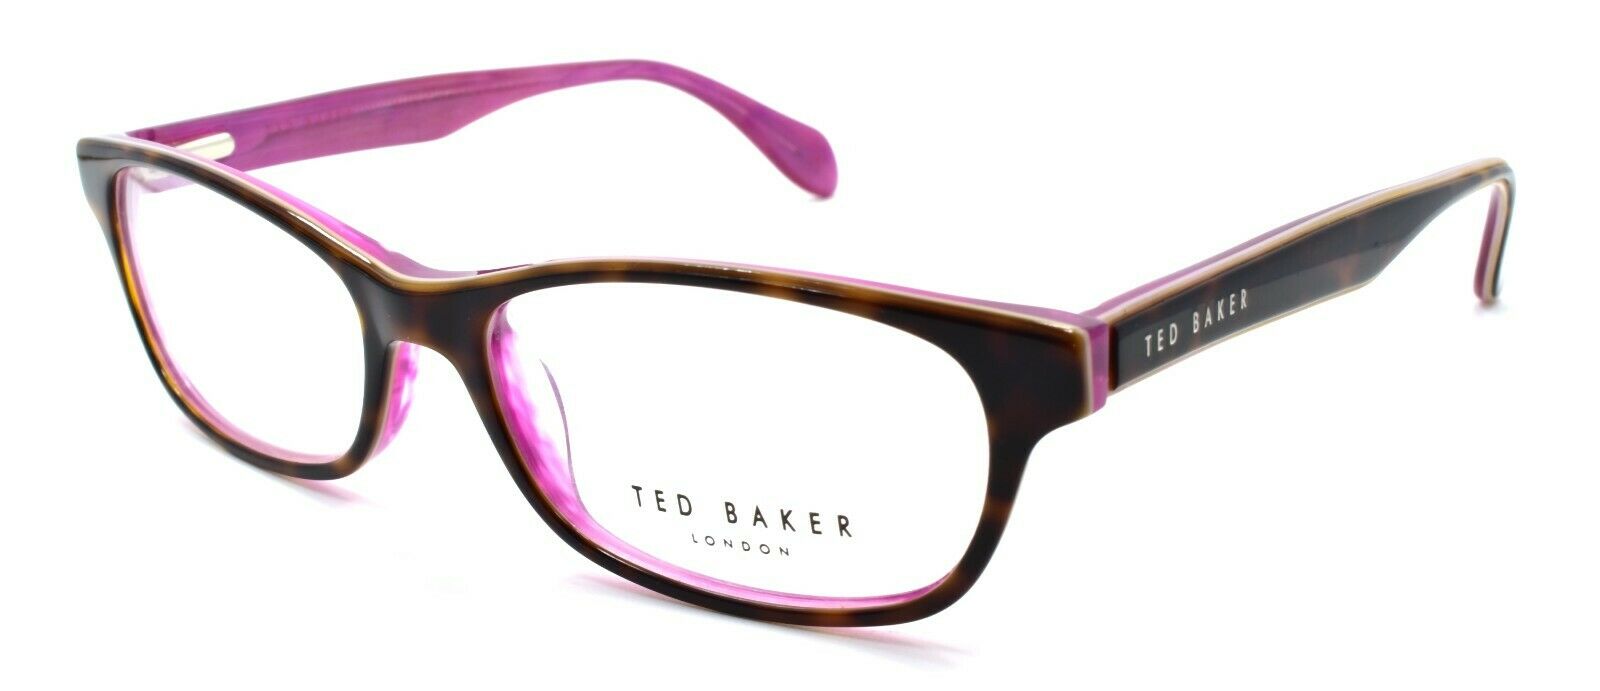 1-Ted Baker Kaya 9070 103 Women's Eyeglasses Frames 52-16-135 Tortoise / Purple-4894327044665-IKSpecs